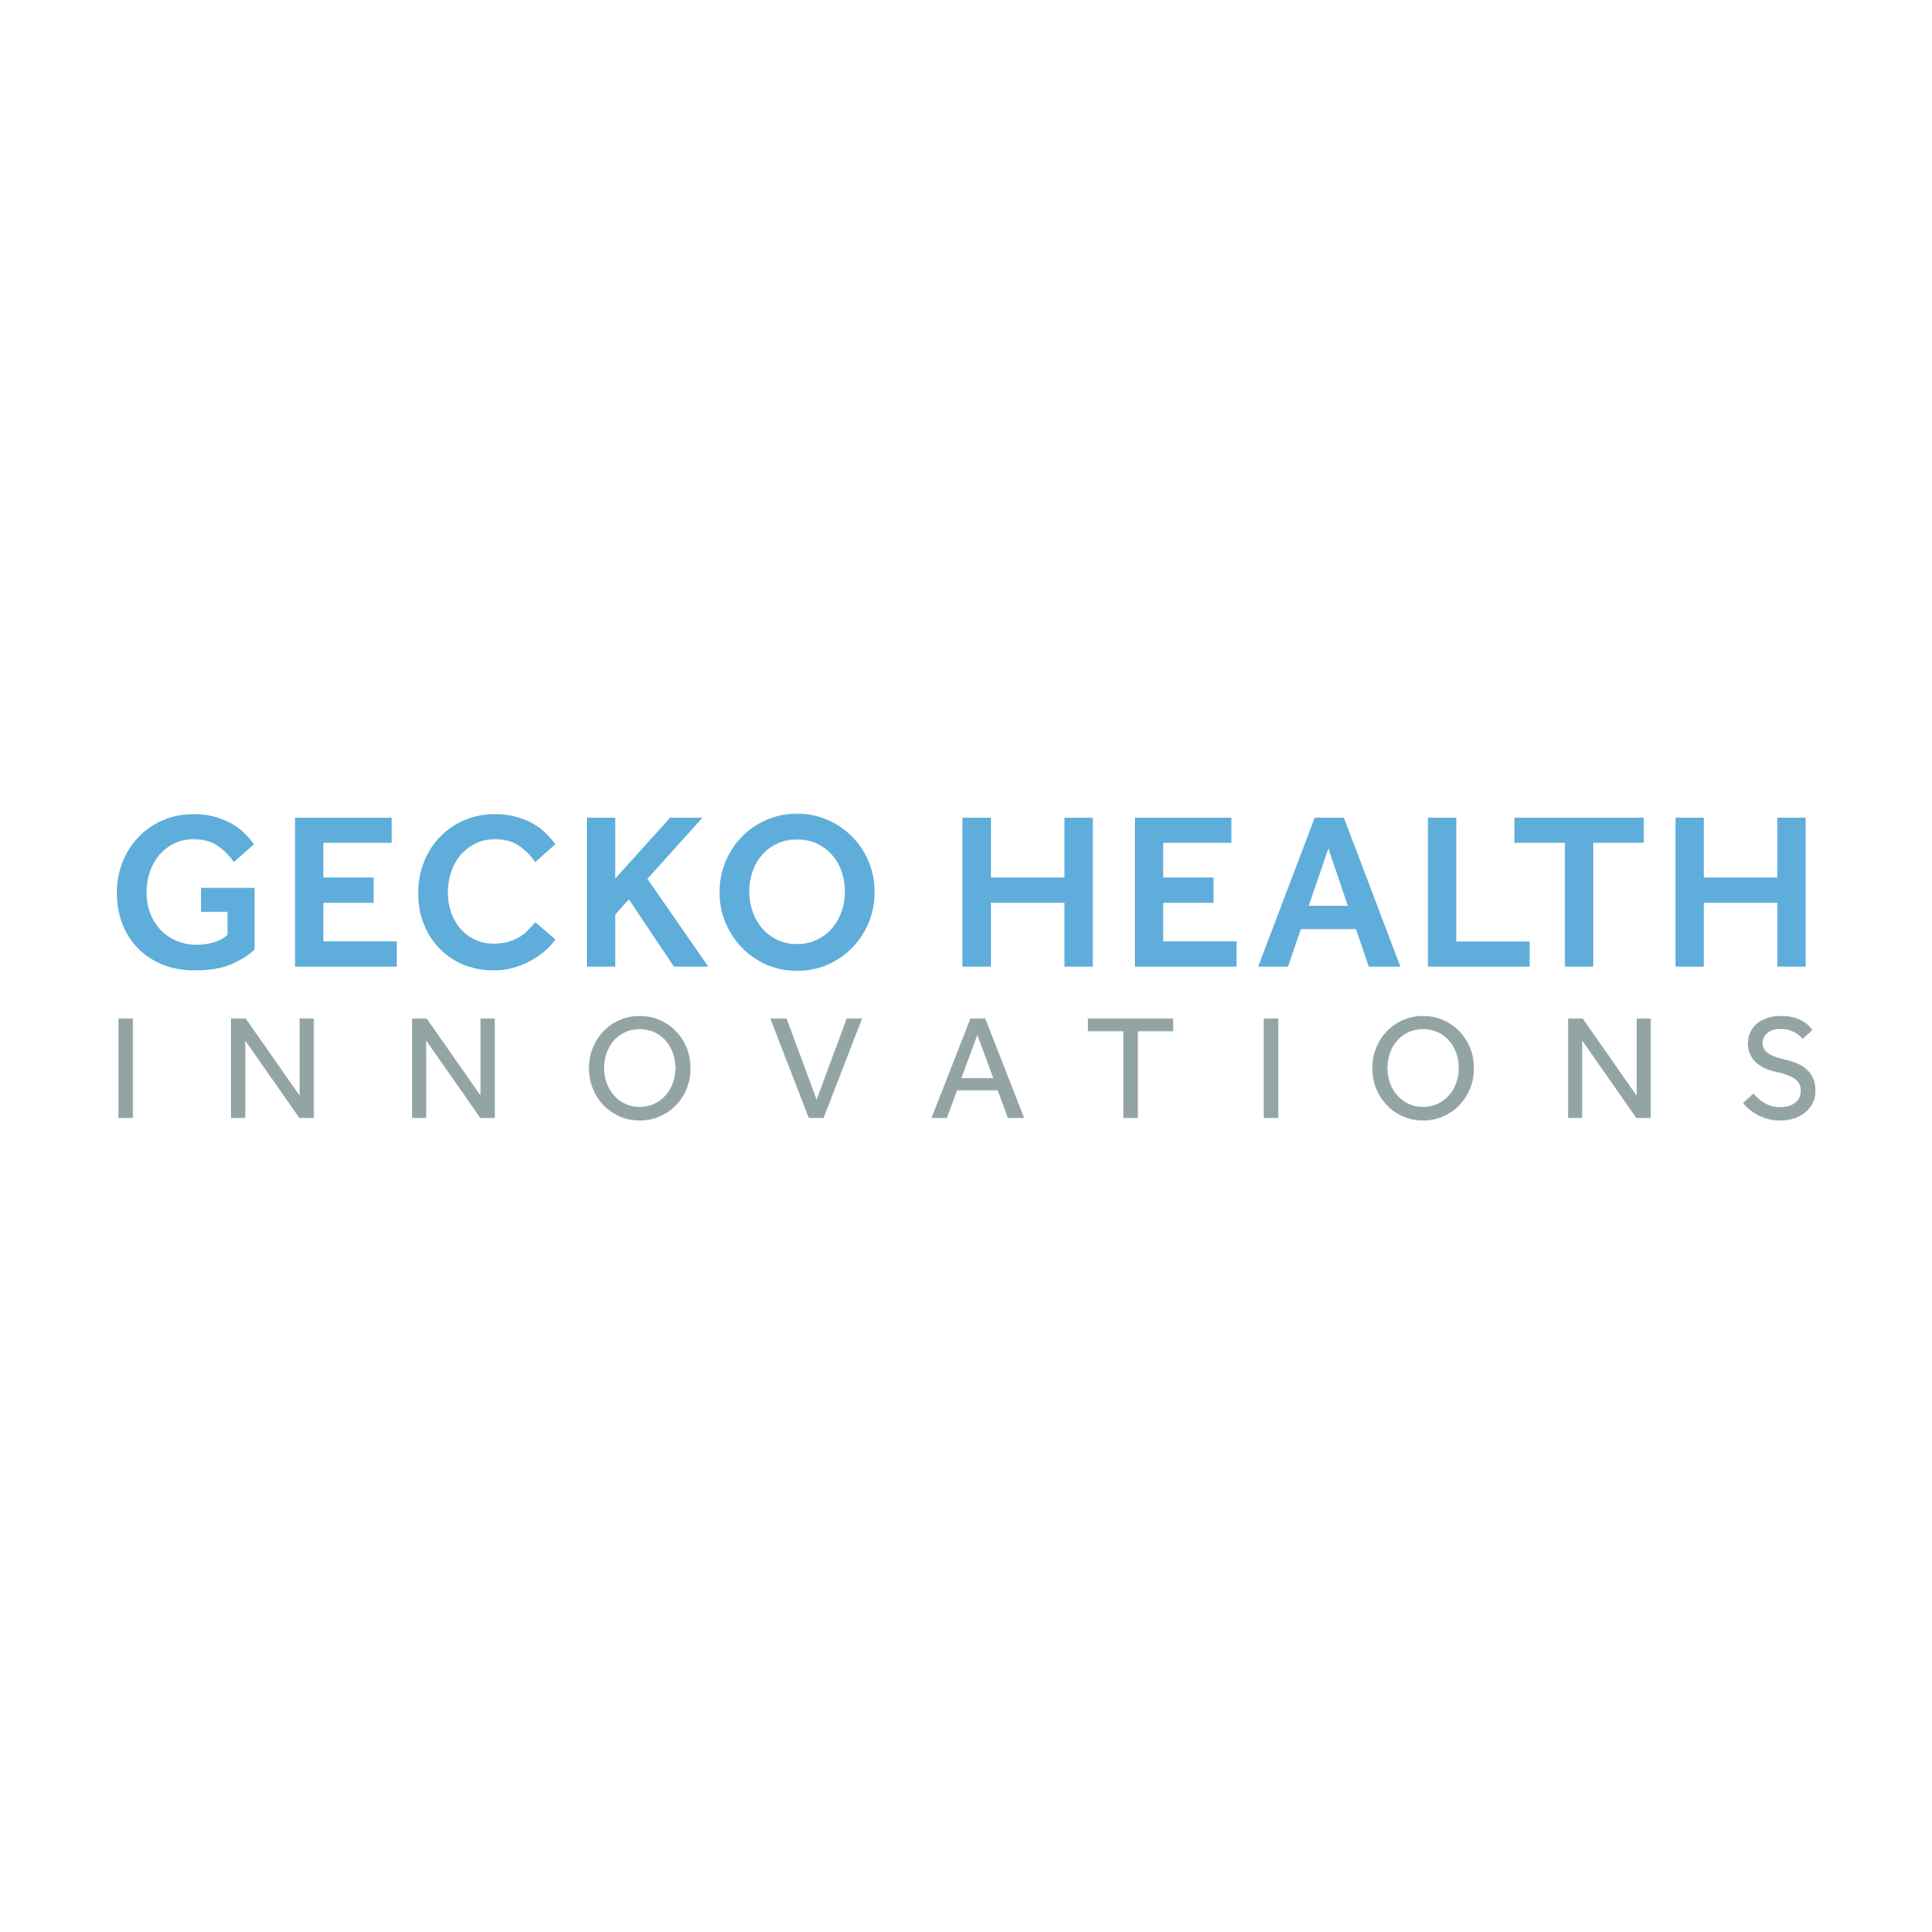 Gecko Health Innovations